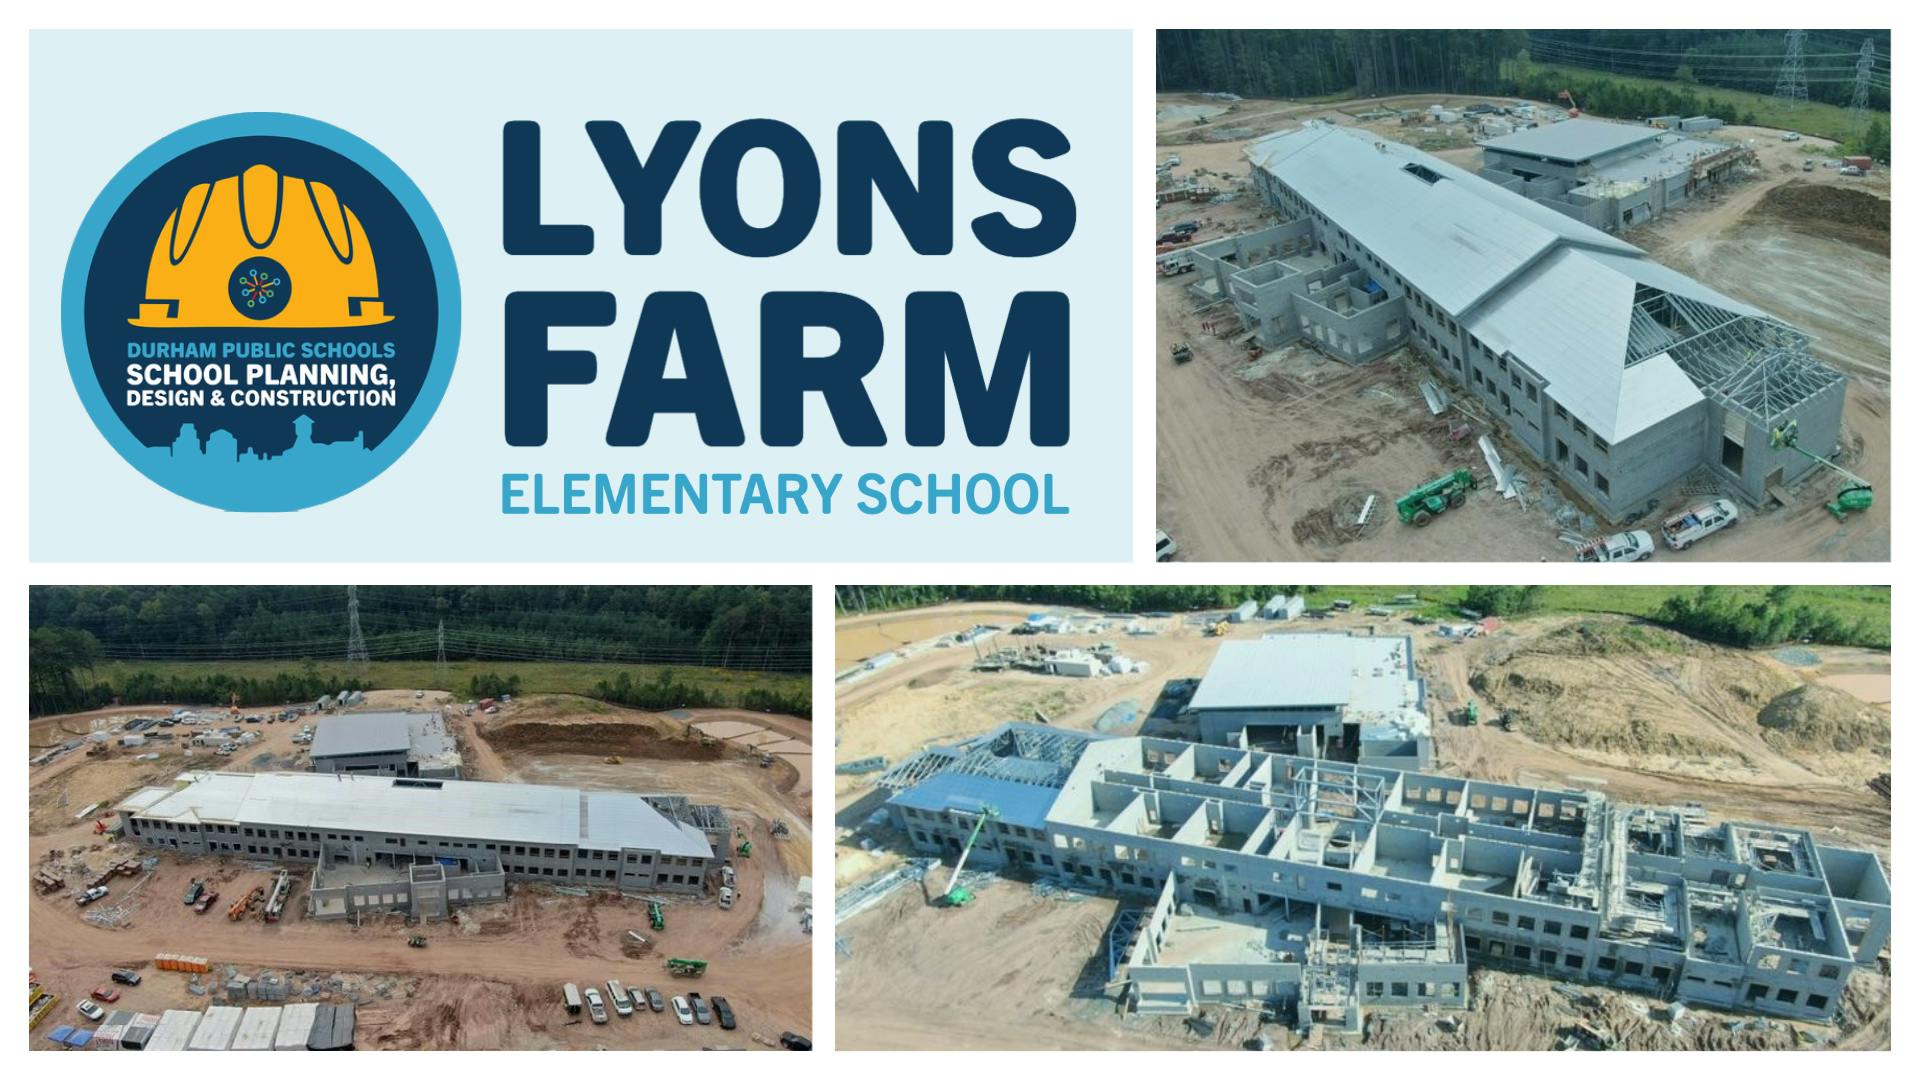 Lyons Farm Elementary School